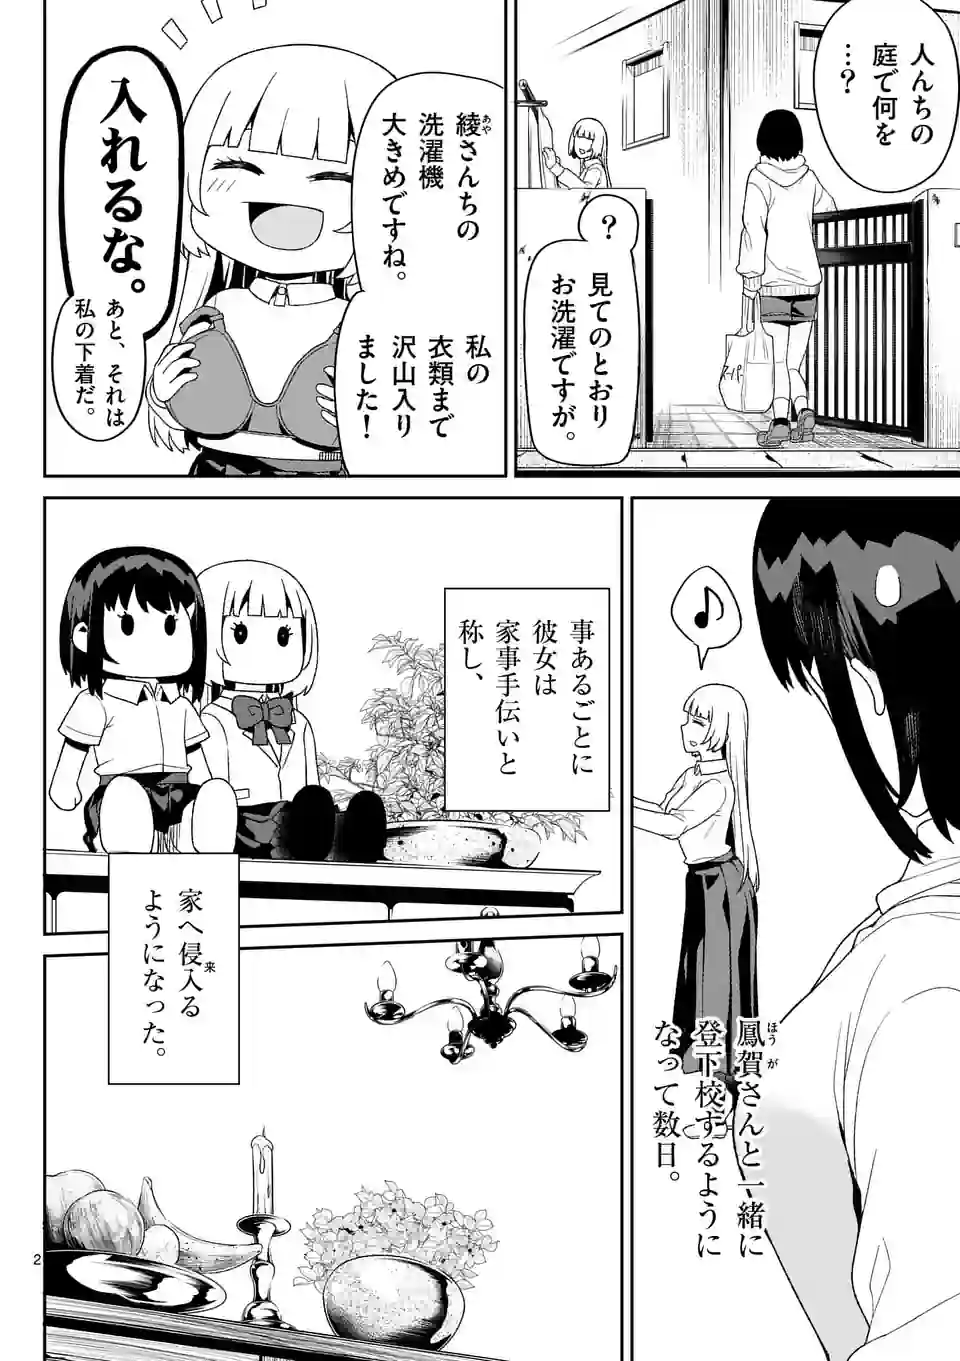 Bakemono Goroshi no Psycholily - Chapter 4 - Page 2